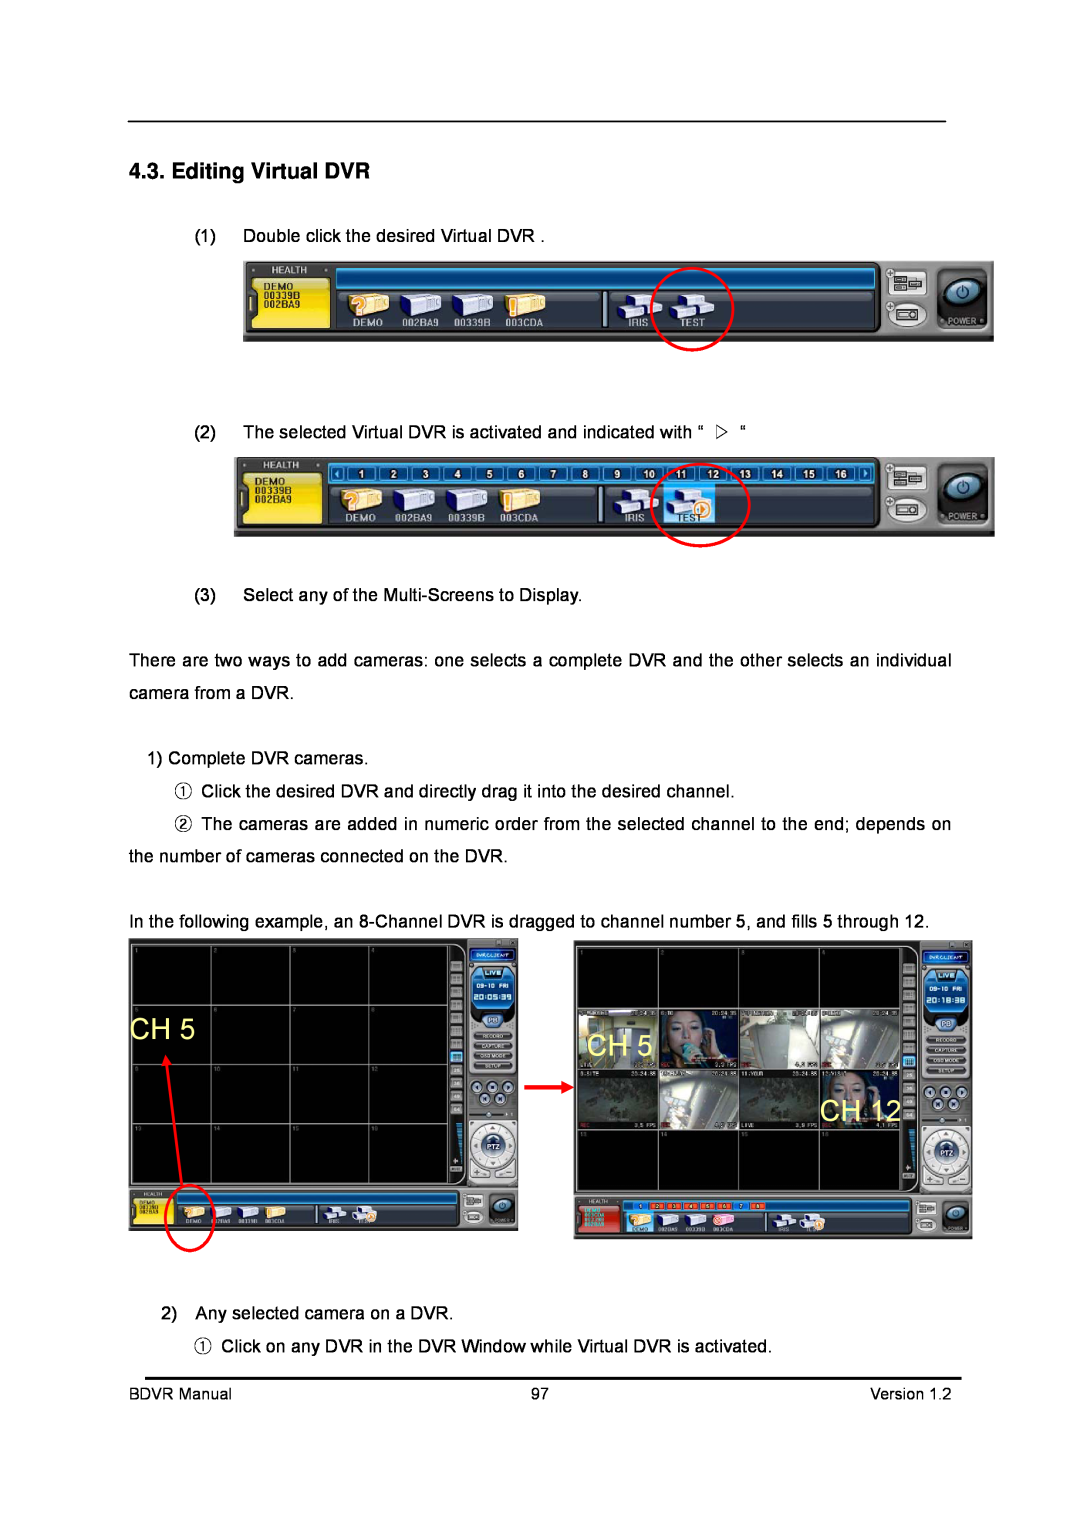 Genie BDVR-4, BDVR-8, BDVR-16 manual Editing Virtual DVR 